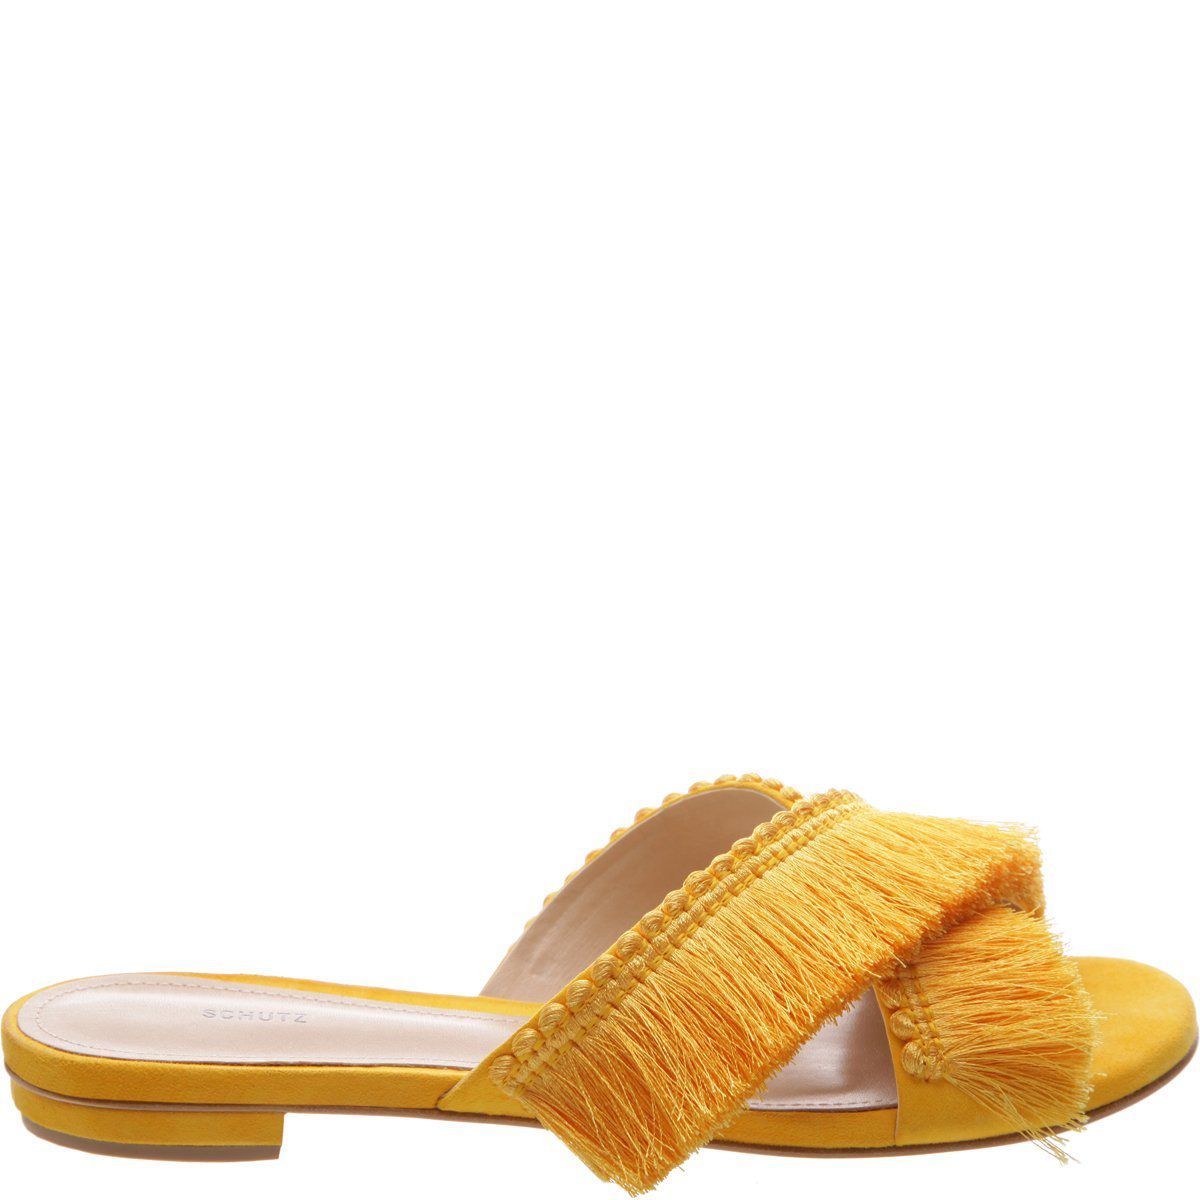 ÎÏÎ¿ÏÎ­Î»ÎµÏÎ¼Î± ÎµÎ¹ÎºÏÎ½Î±Ï Î³Î¹Î± 21 Comfortable (and Chic) Flat Sandals You'll Live in This Summer Sliding into summer like...